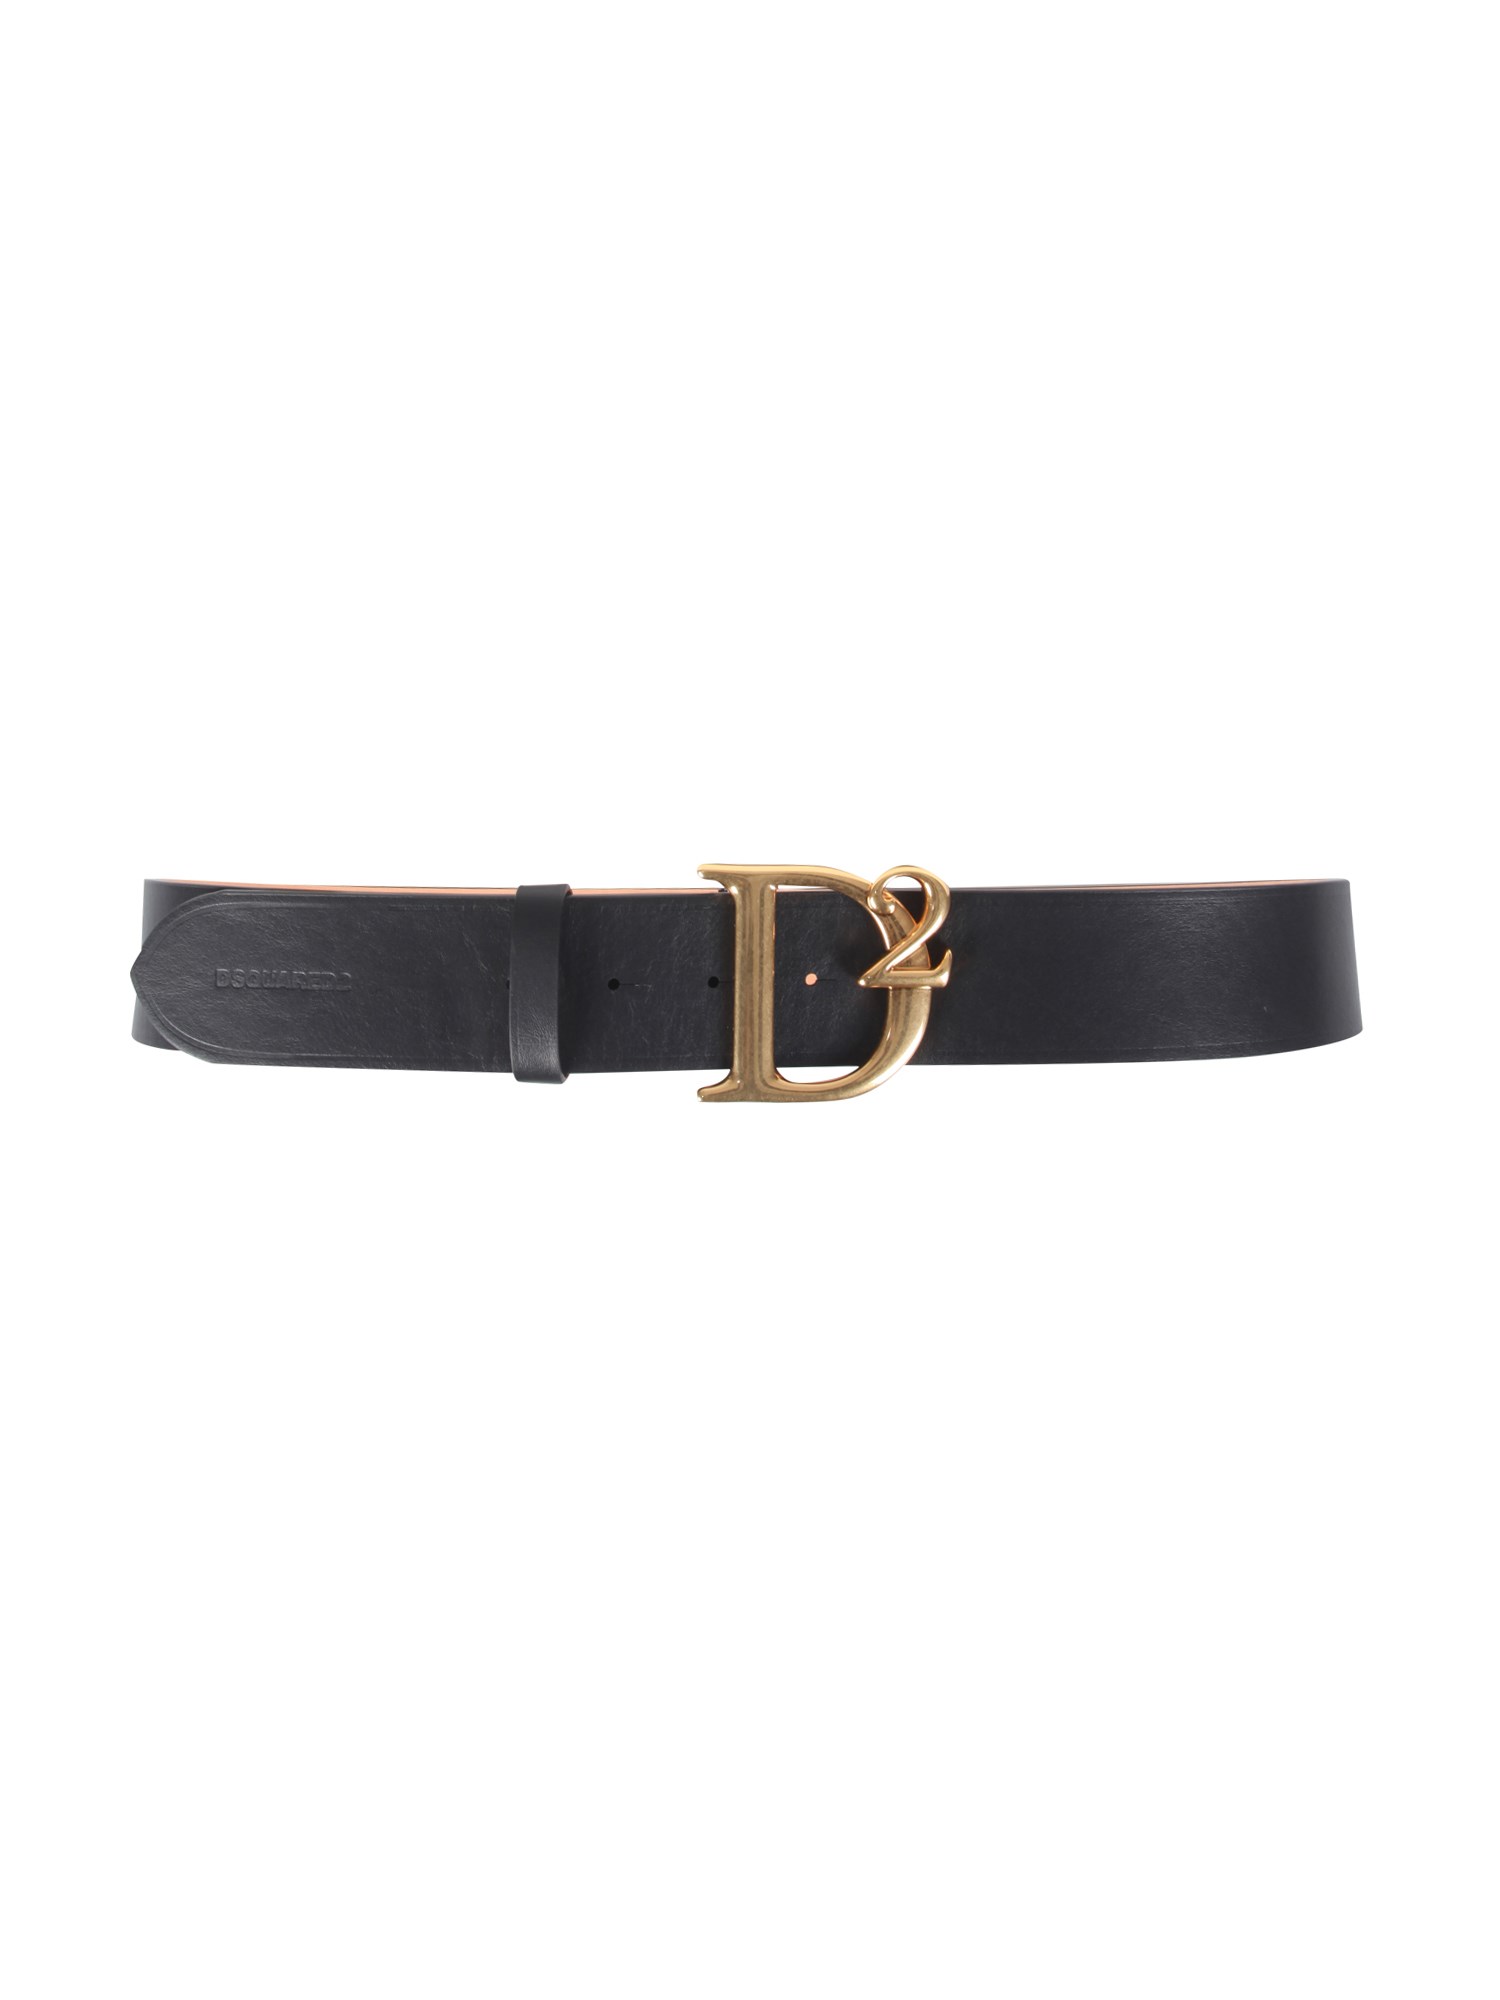 dsquared leather belt